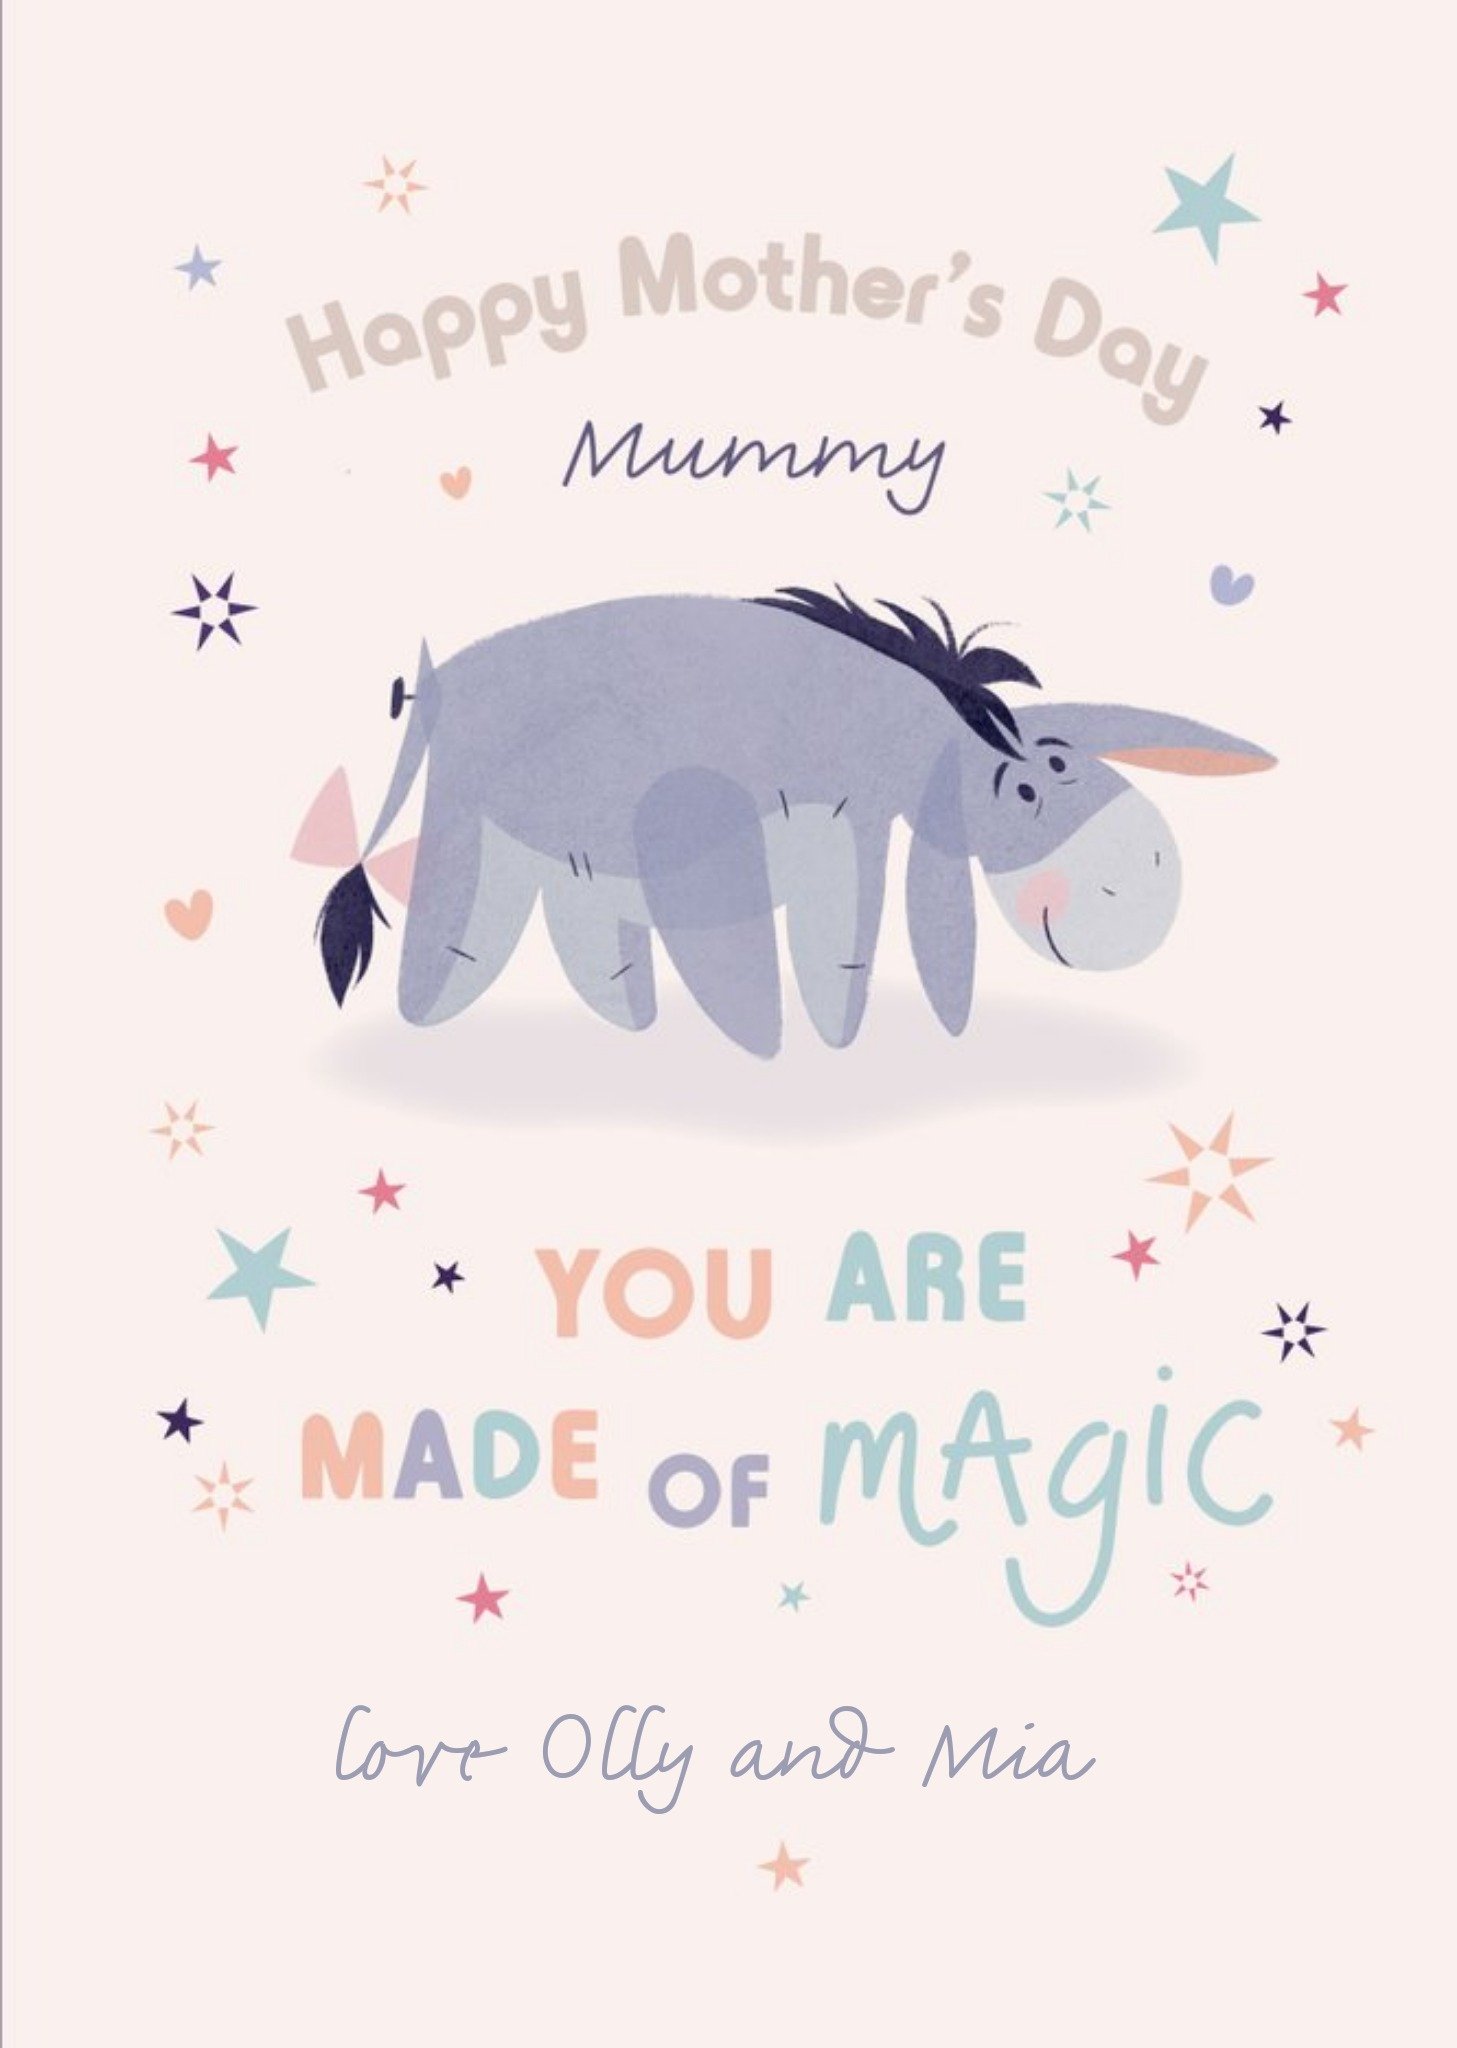 Disney Winnie The Pooh Eeyore Made Of Magic Mummy Mother's Day Card Ecard